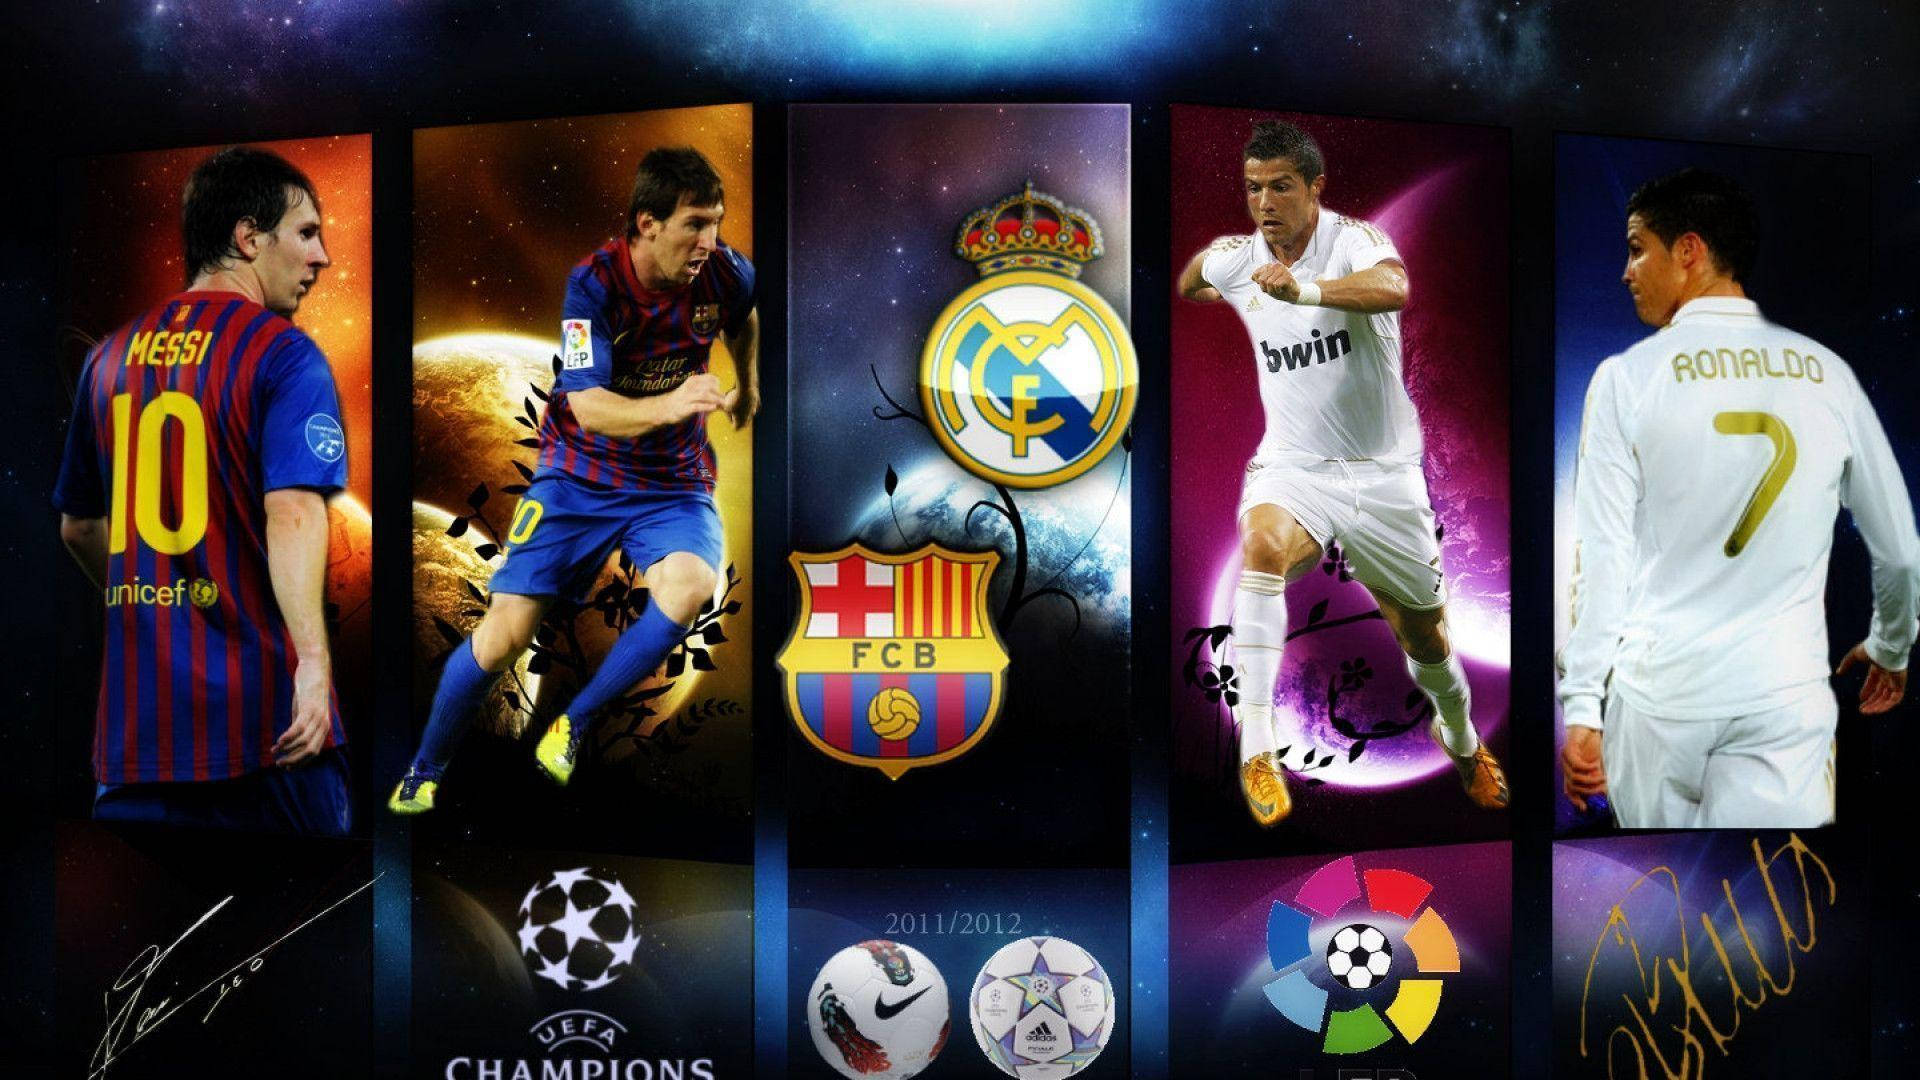 Cool Fodbold Messi Og Ronaldo Wallpaper